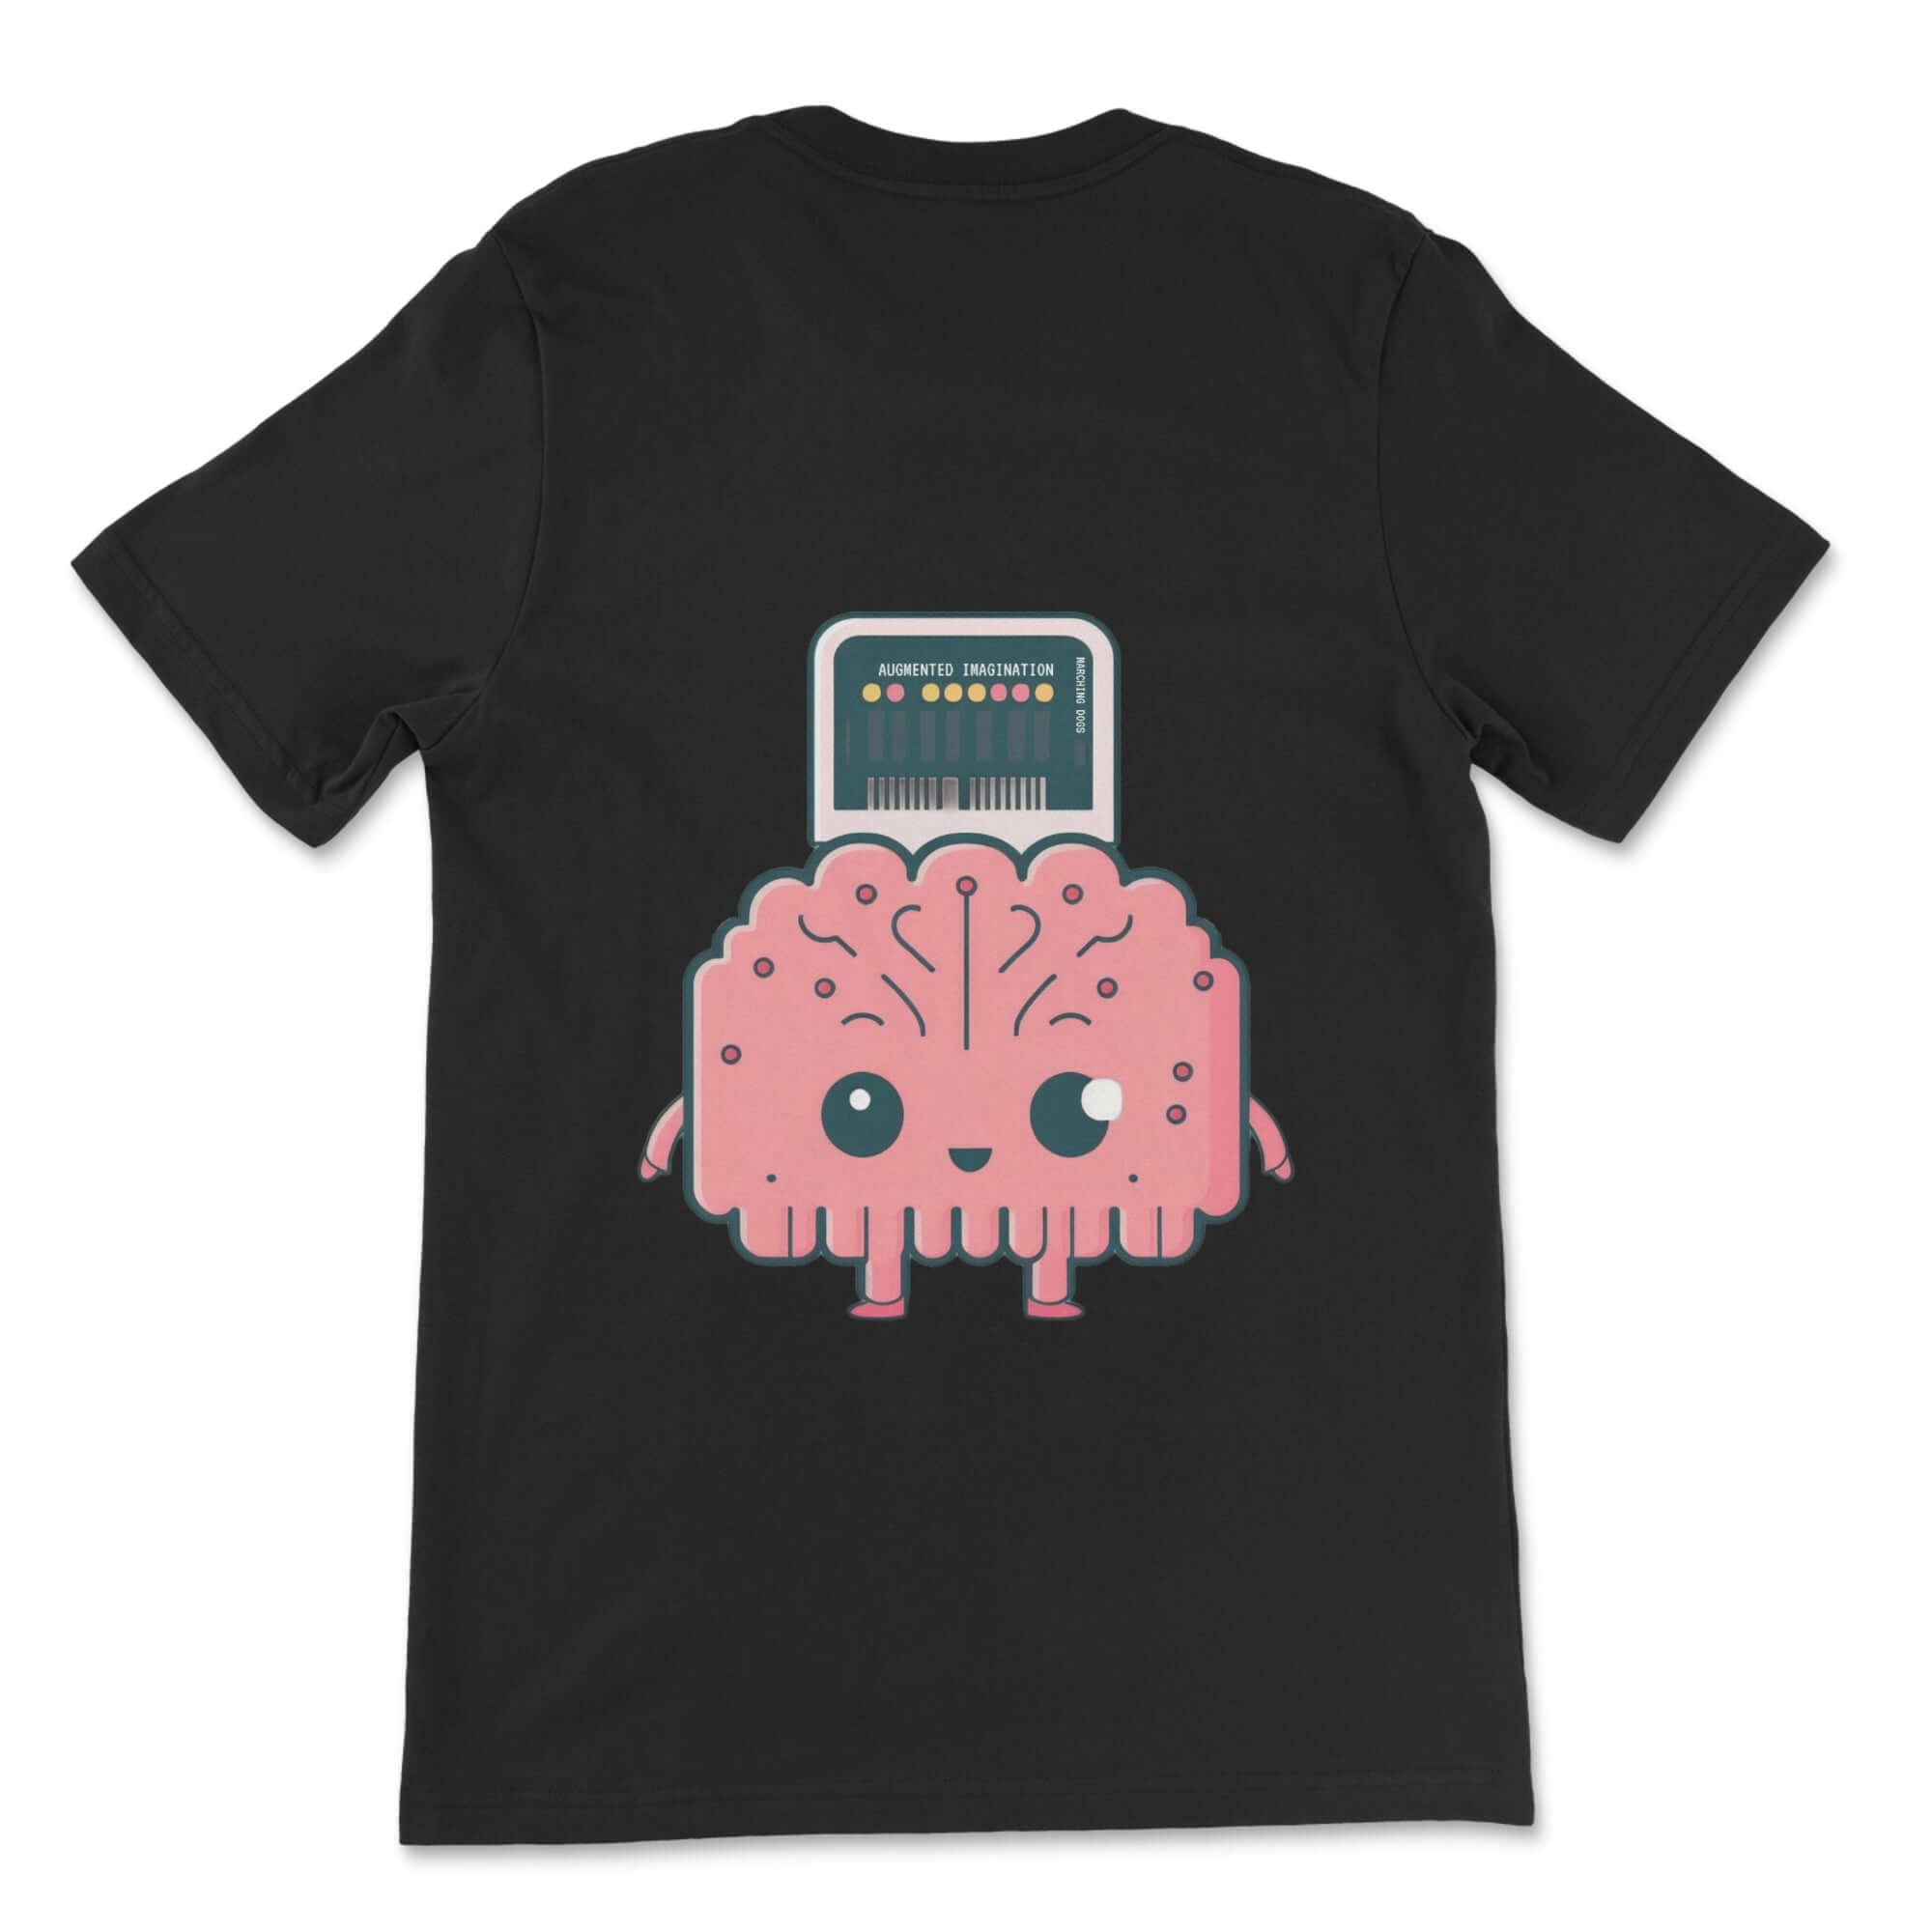 'Augmented Imagination' Pocket T-Shirt